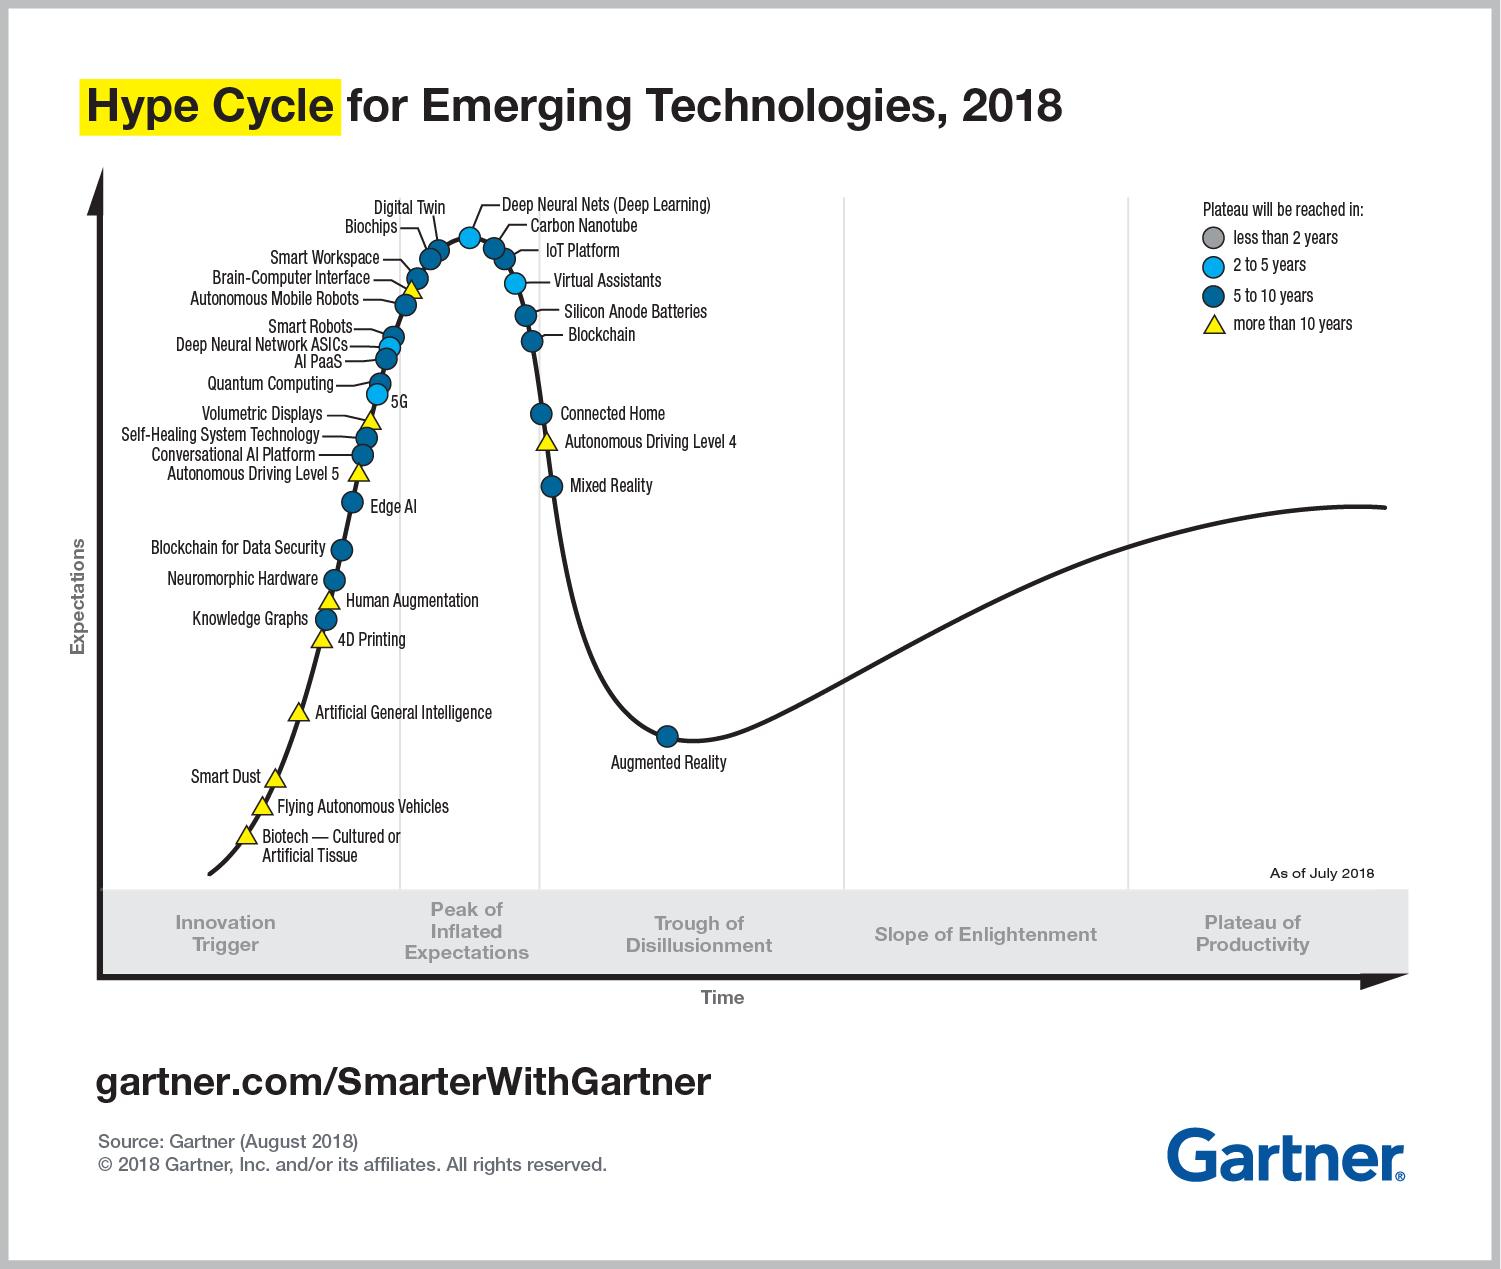 NEWS:  Gartner’s Hype Cycle for Emerging Technologies in 2018